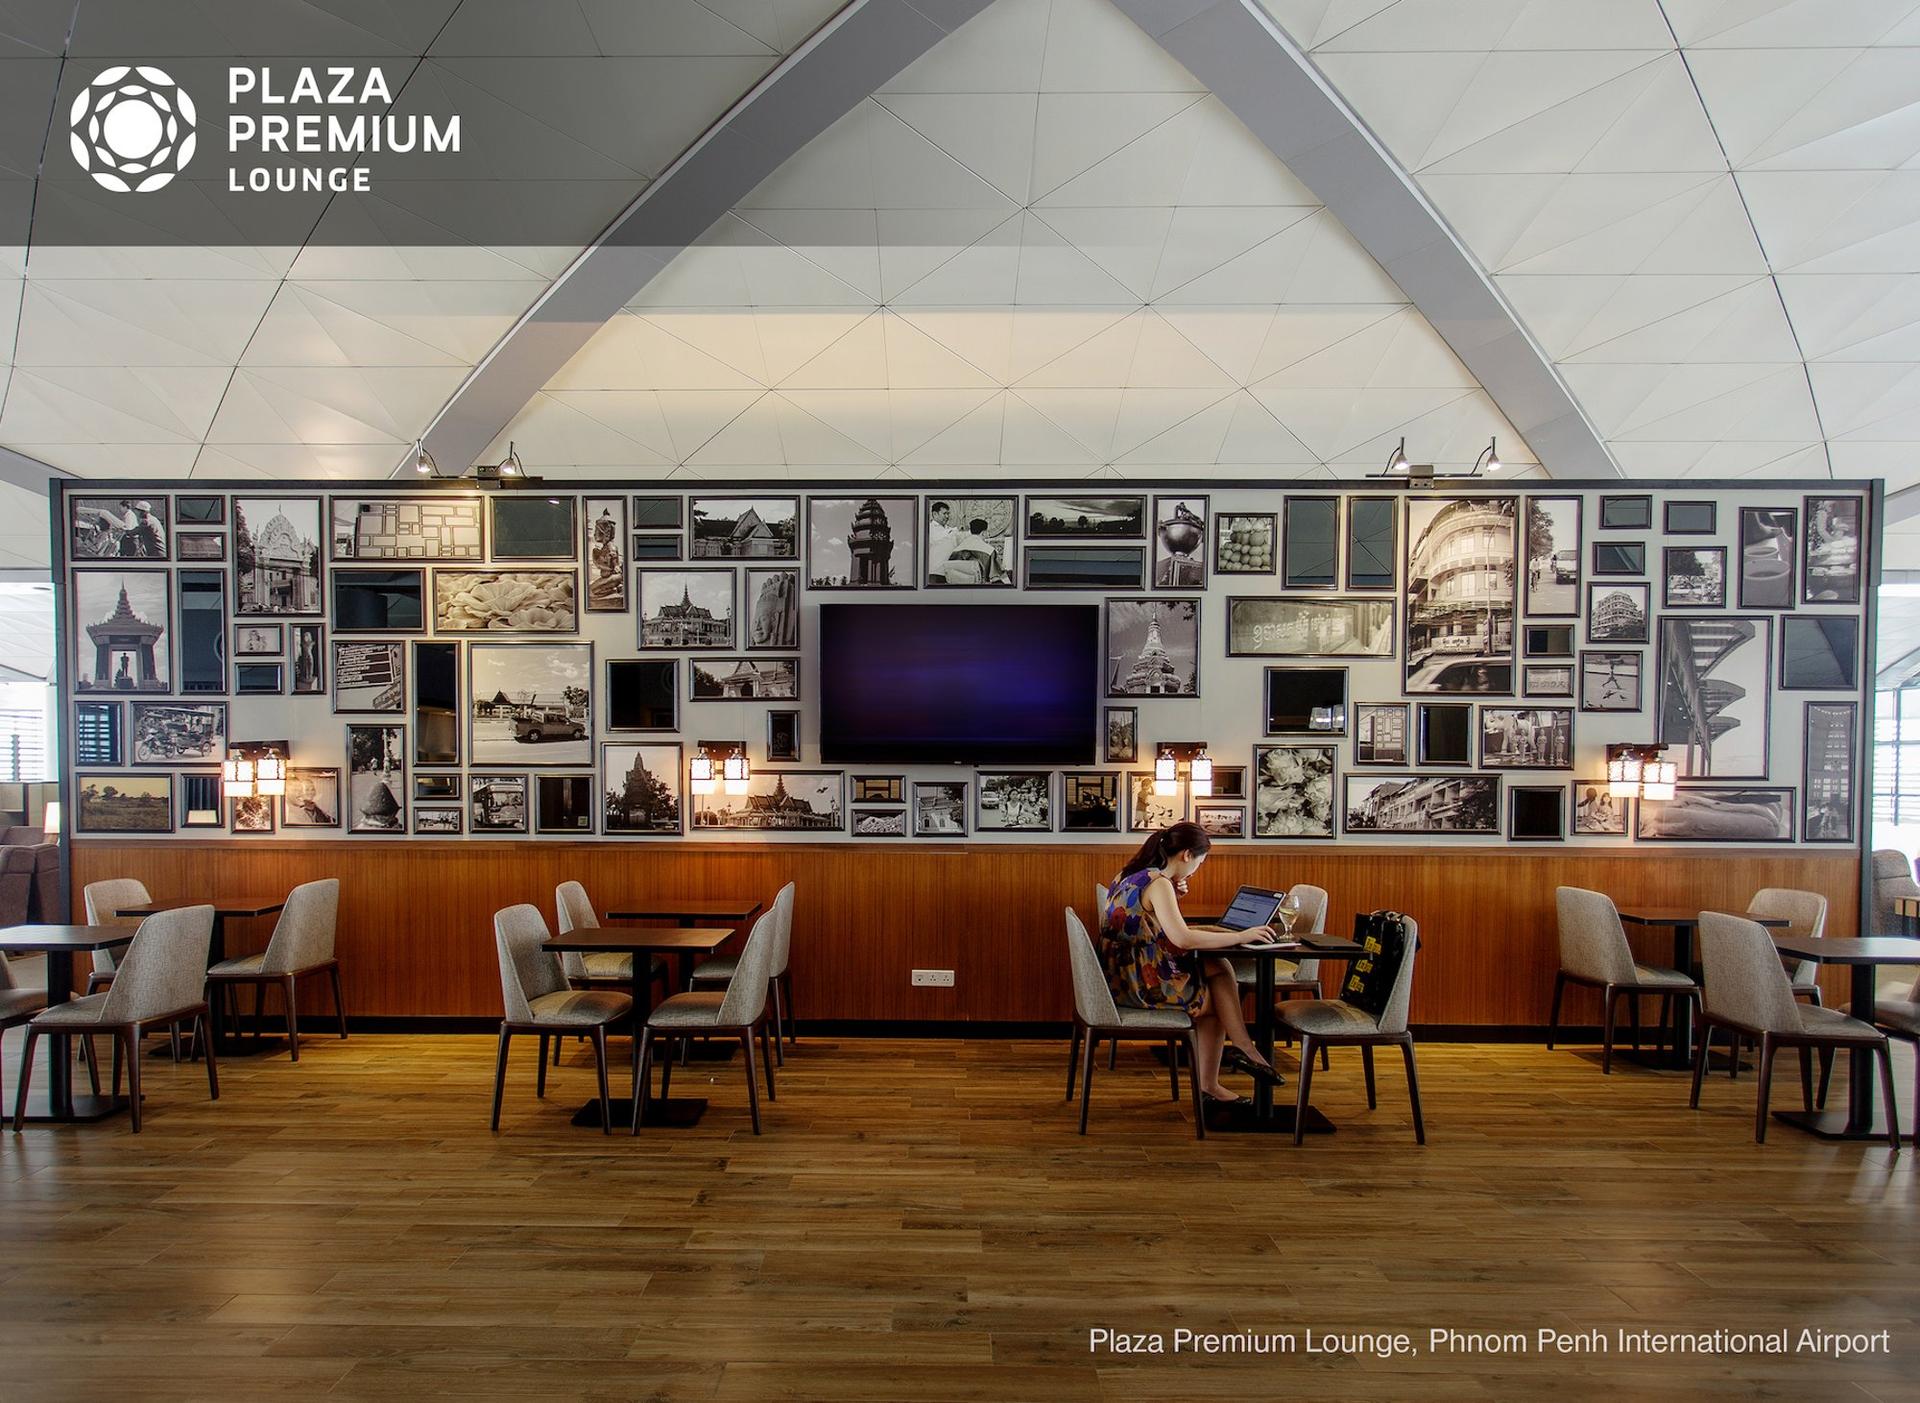 Plaza Premium Lounge image 27 of 34